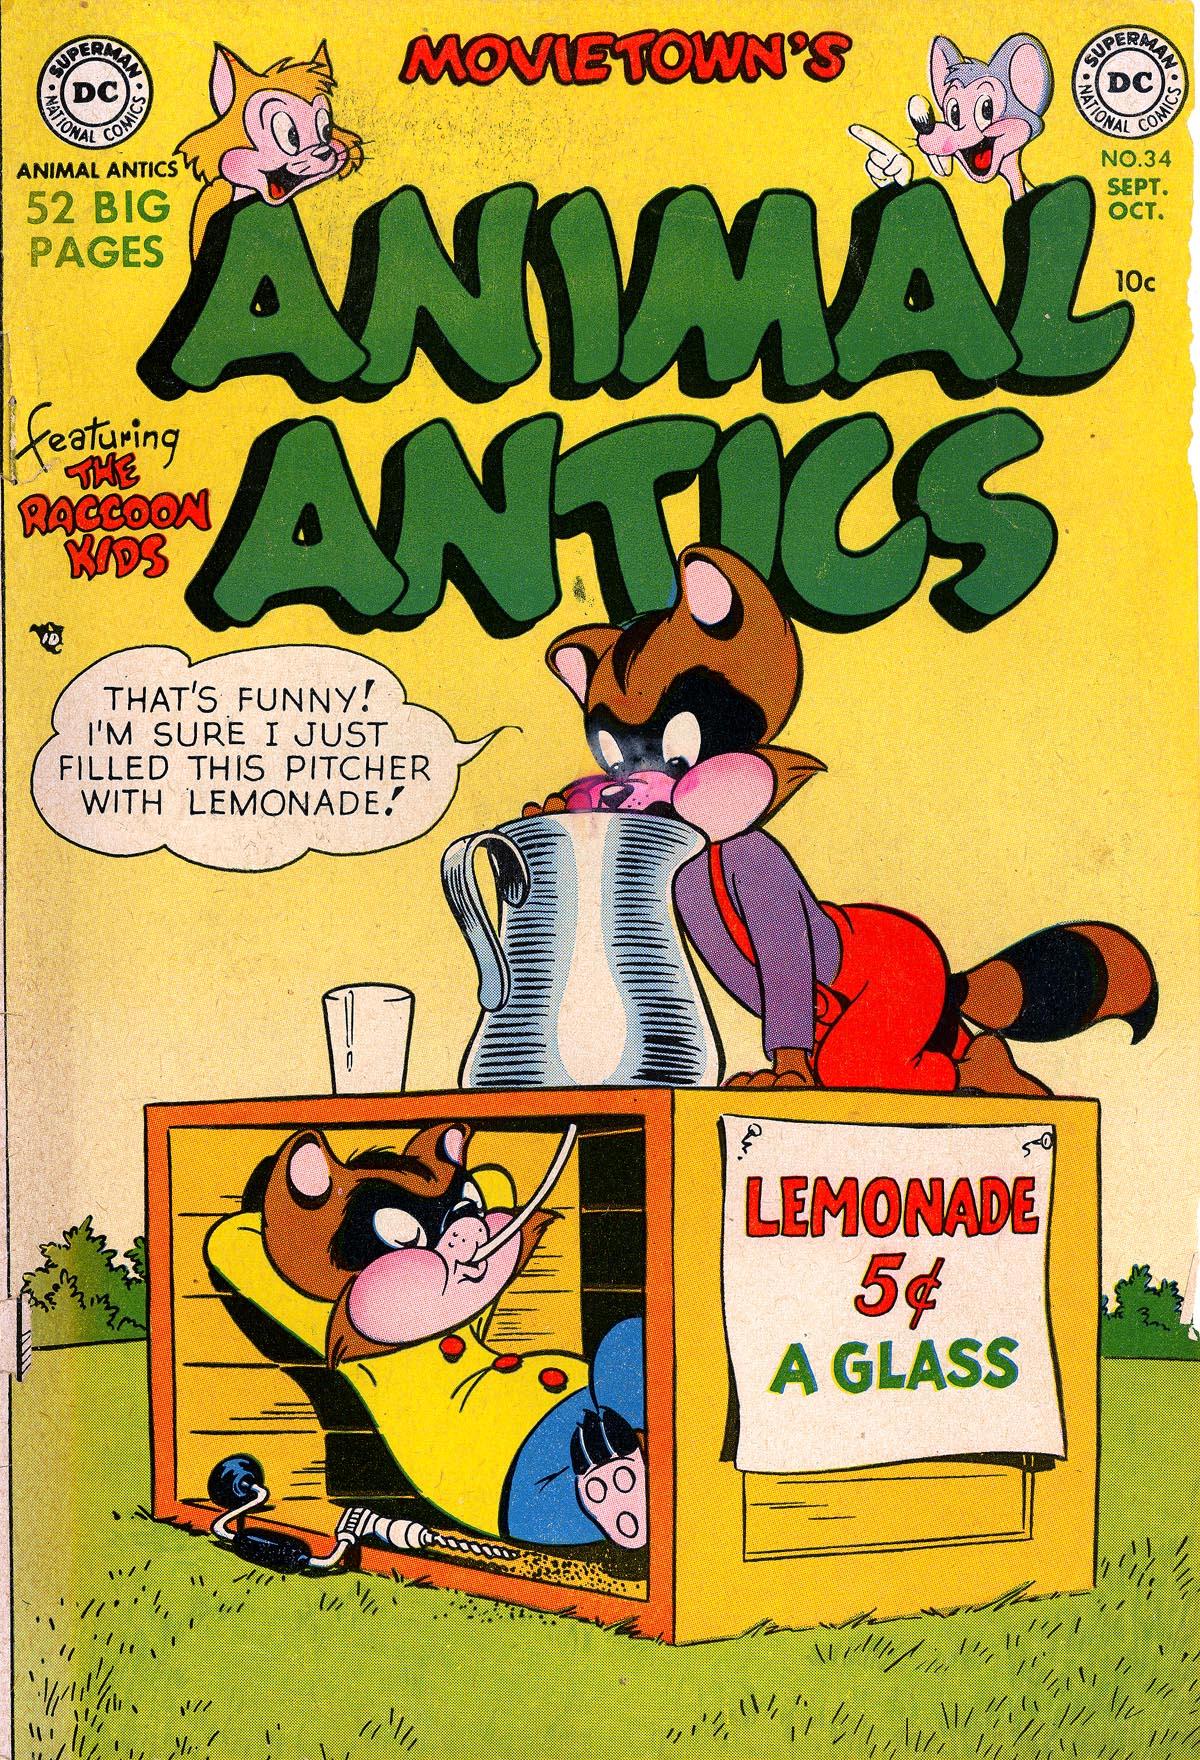 Movietown's Animal Antics Vol. 1 #34